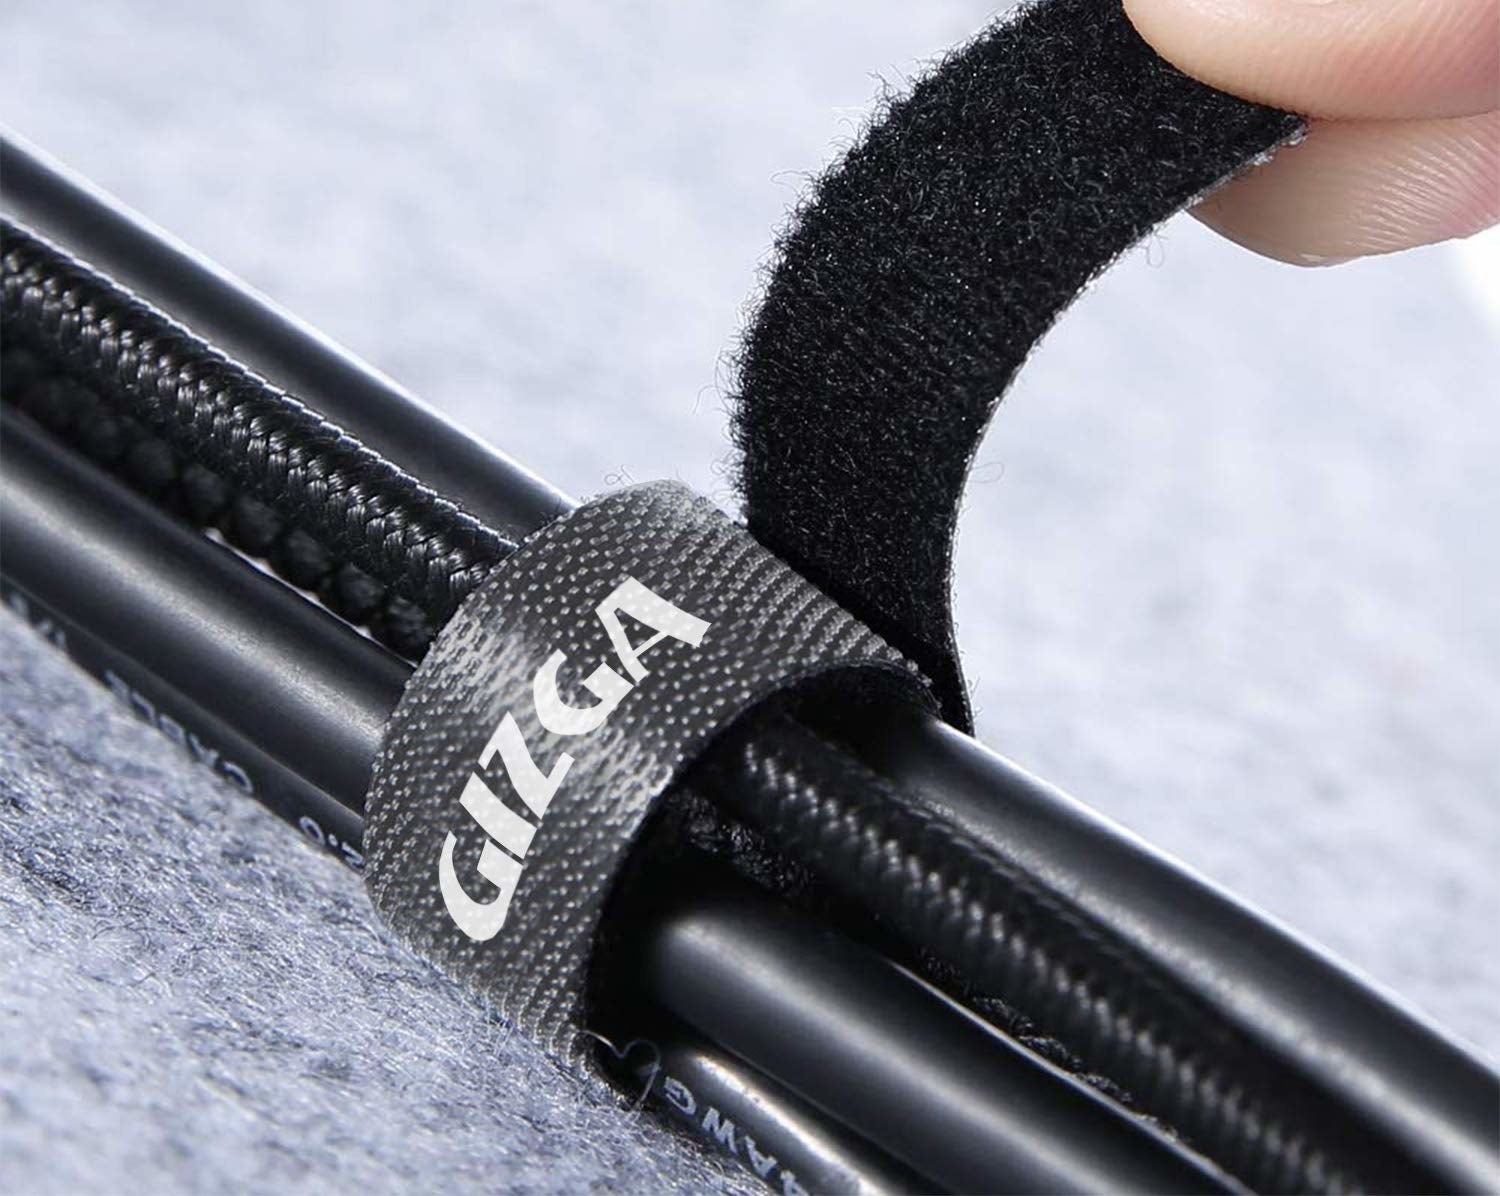 Black velcro cable ties.